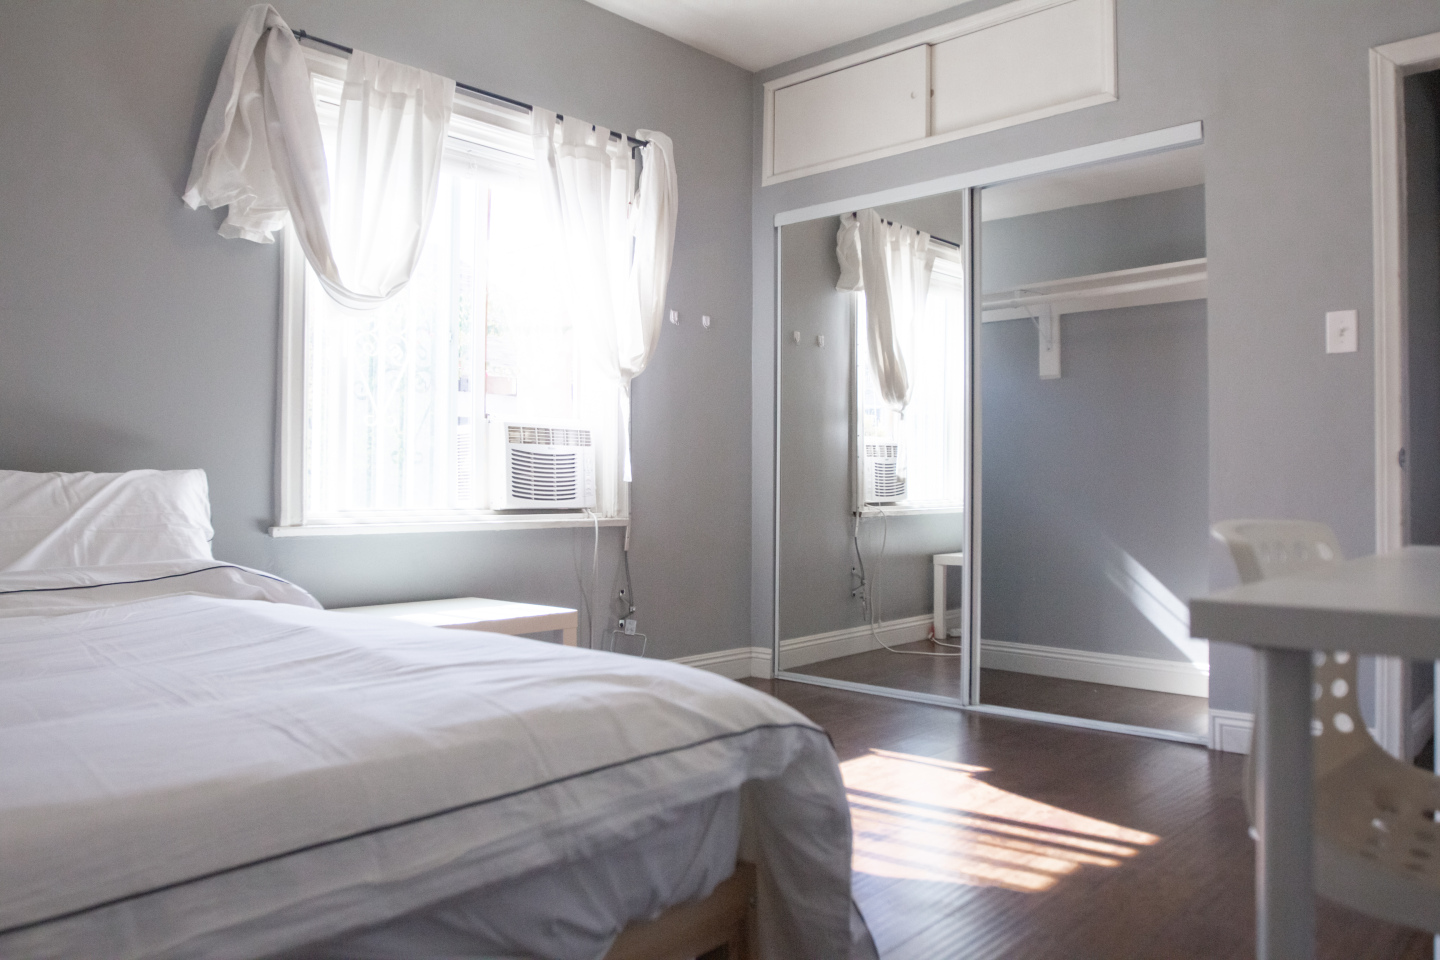 Hardwood floors, white curtain , gray comforter on bed 